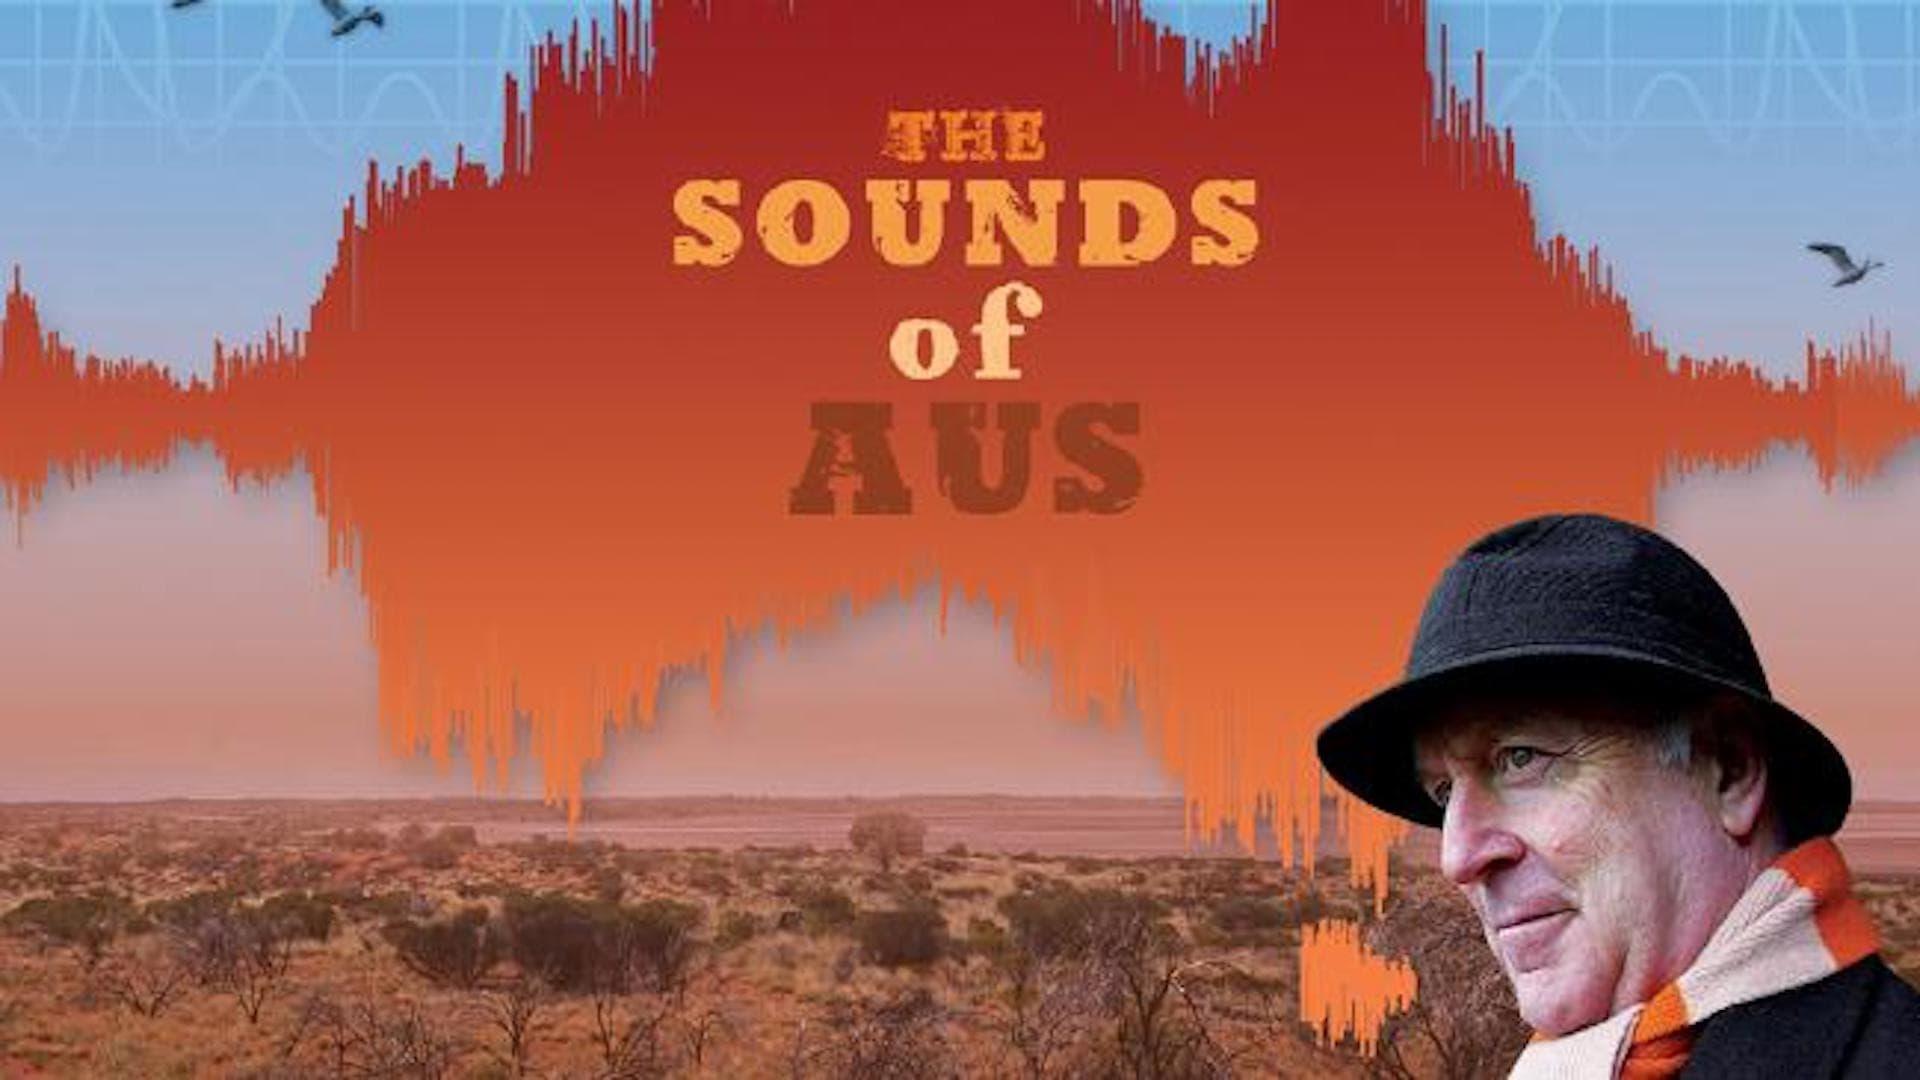 The Sounds of Aus backdrop